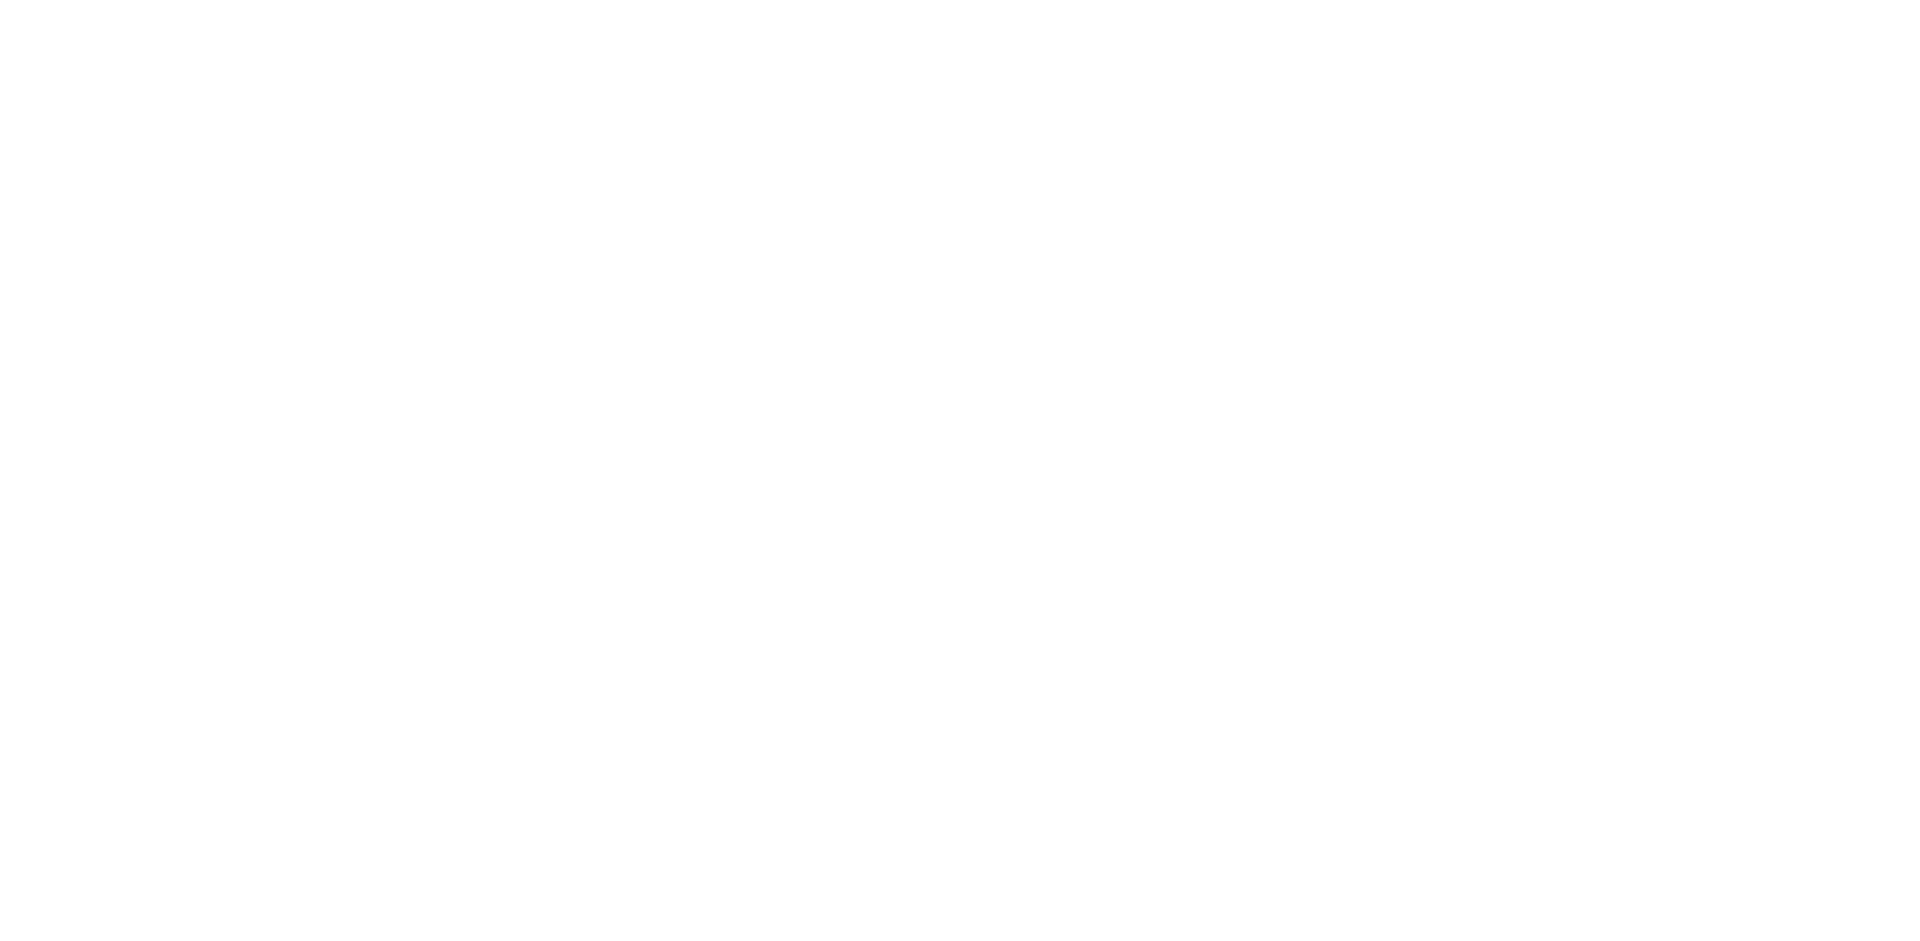 Koromatua Kaihuri Hydraulic(1-40 Tons) |BONOVO Tāpiritanga